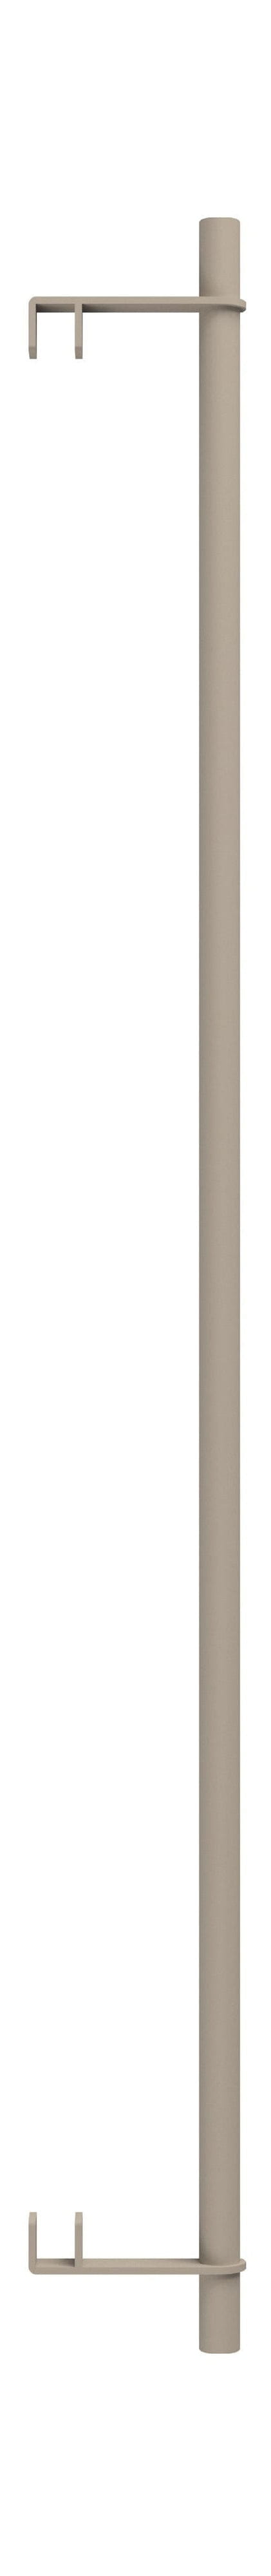 Moebe Rekkensysteem/muurplanken kledingbar 85 cm, warm grijs